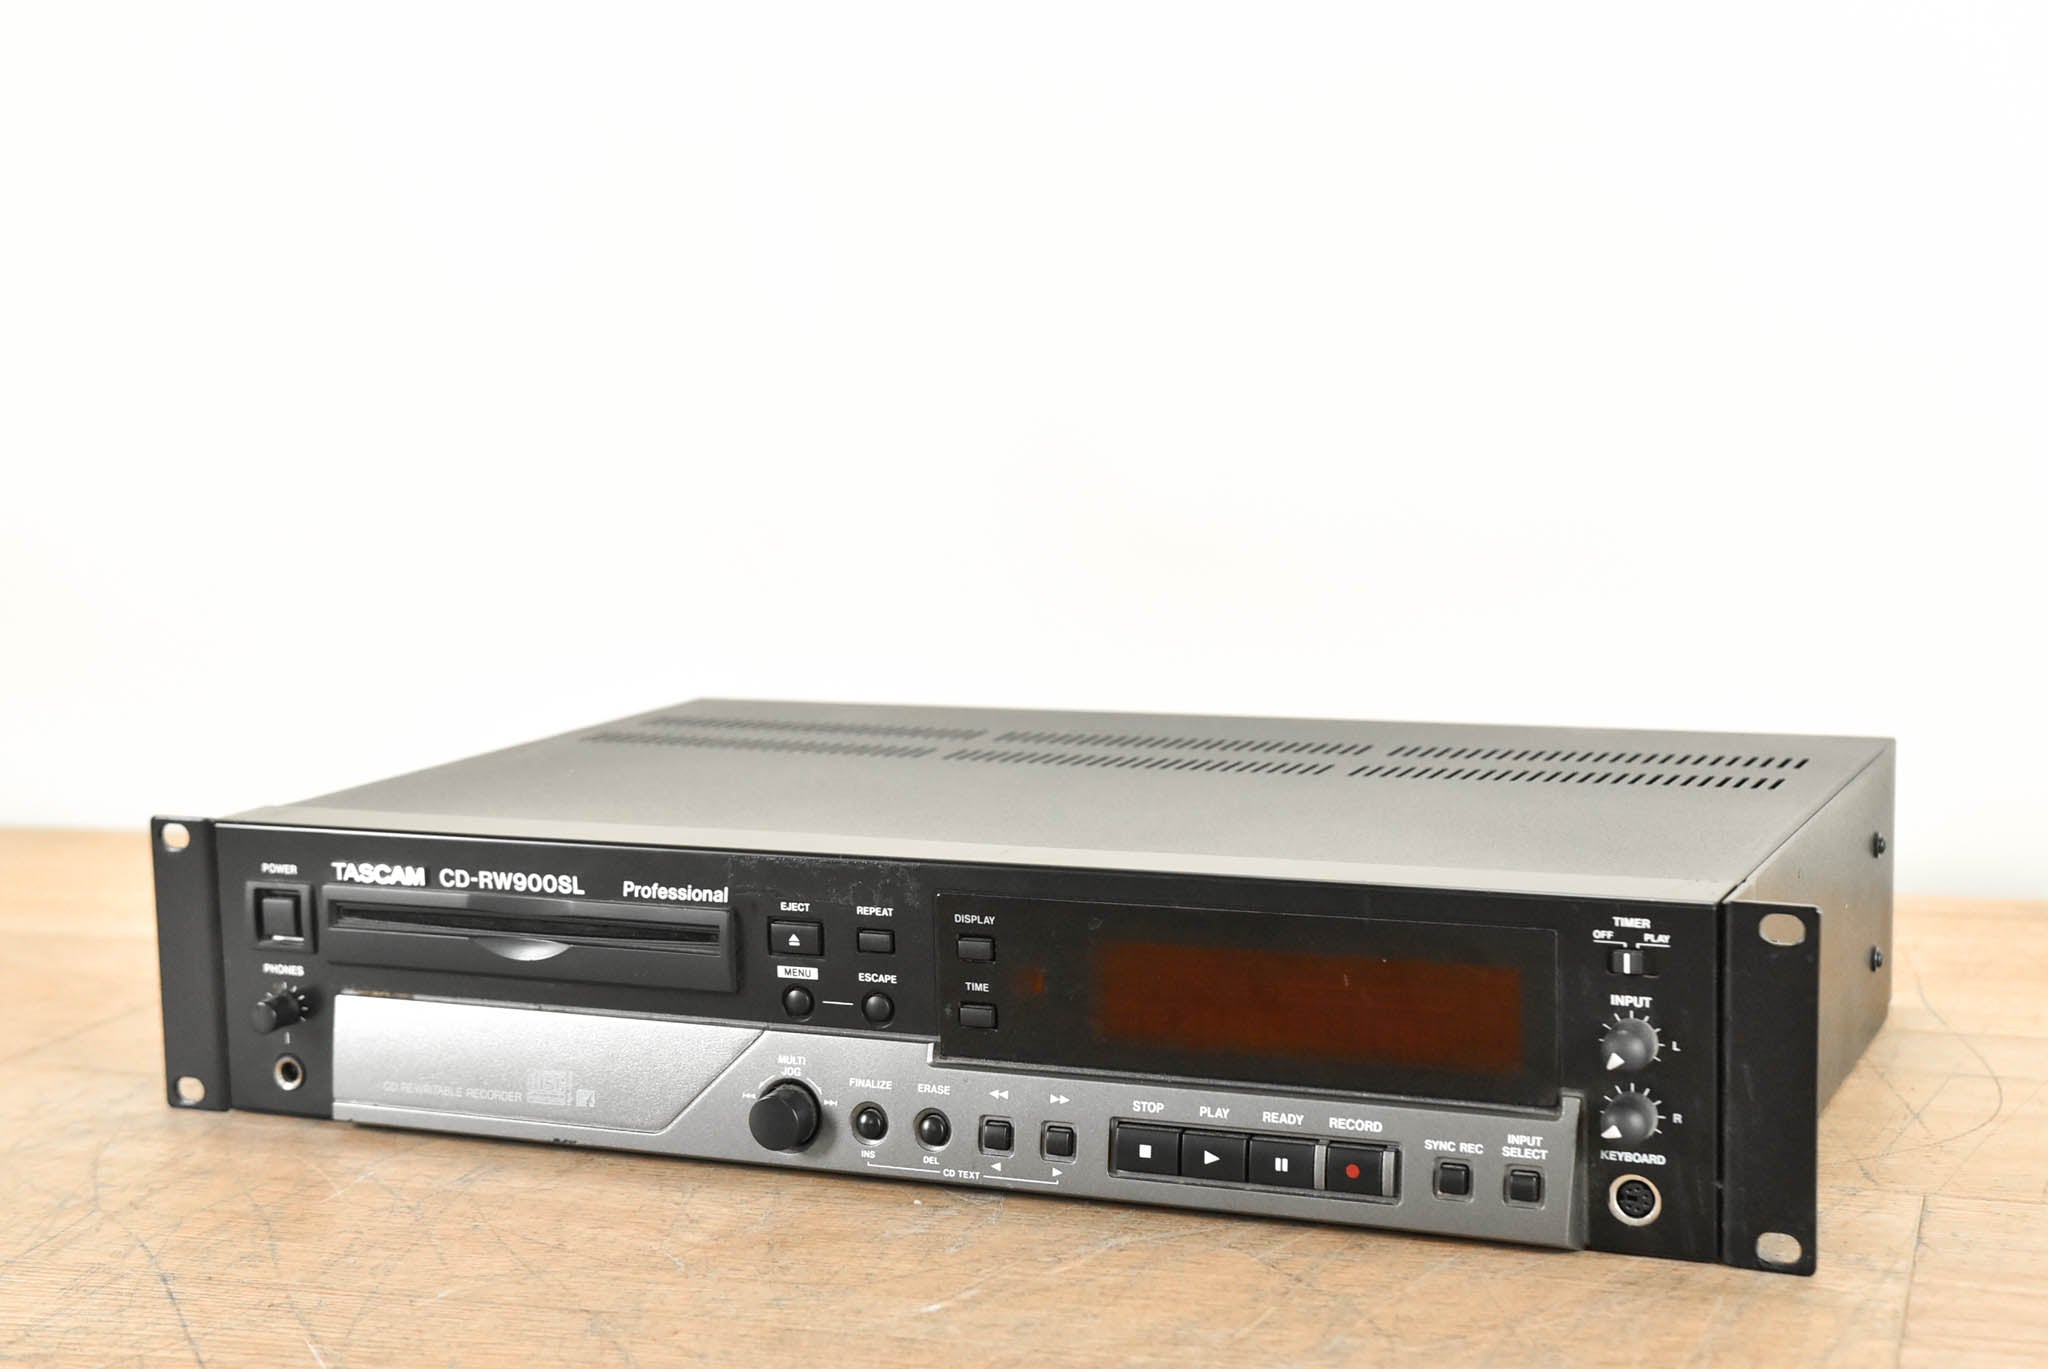 TASCAM CD-RW900SL CD Rewritable Recorder